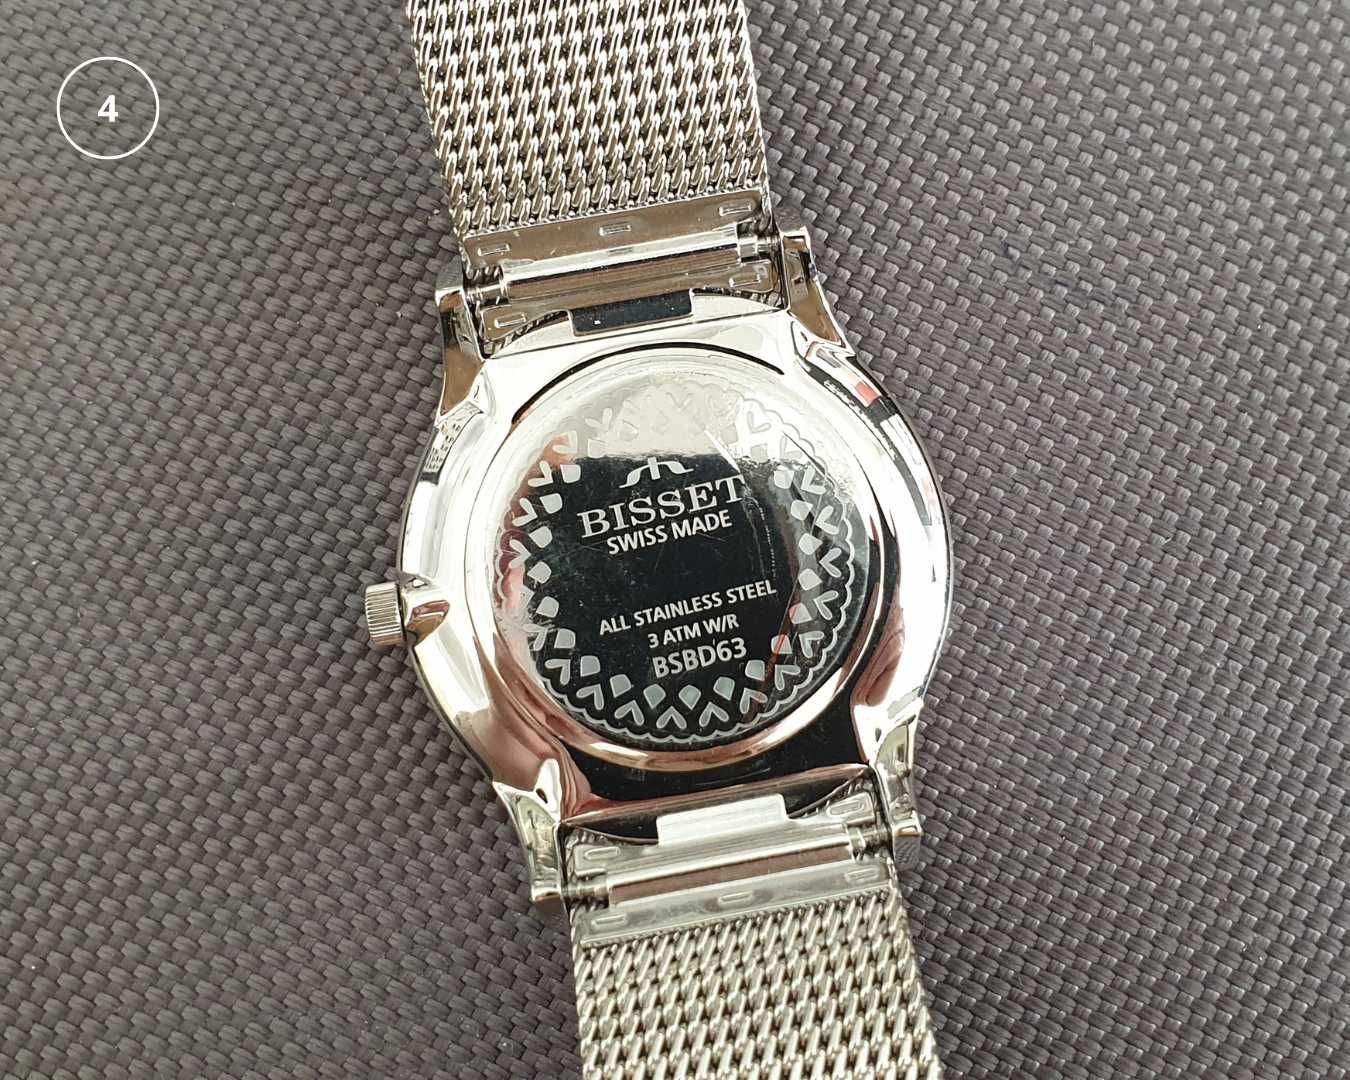 Zegarek damski szwajcarski Bisset stalowy / srebrny klasyczny